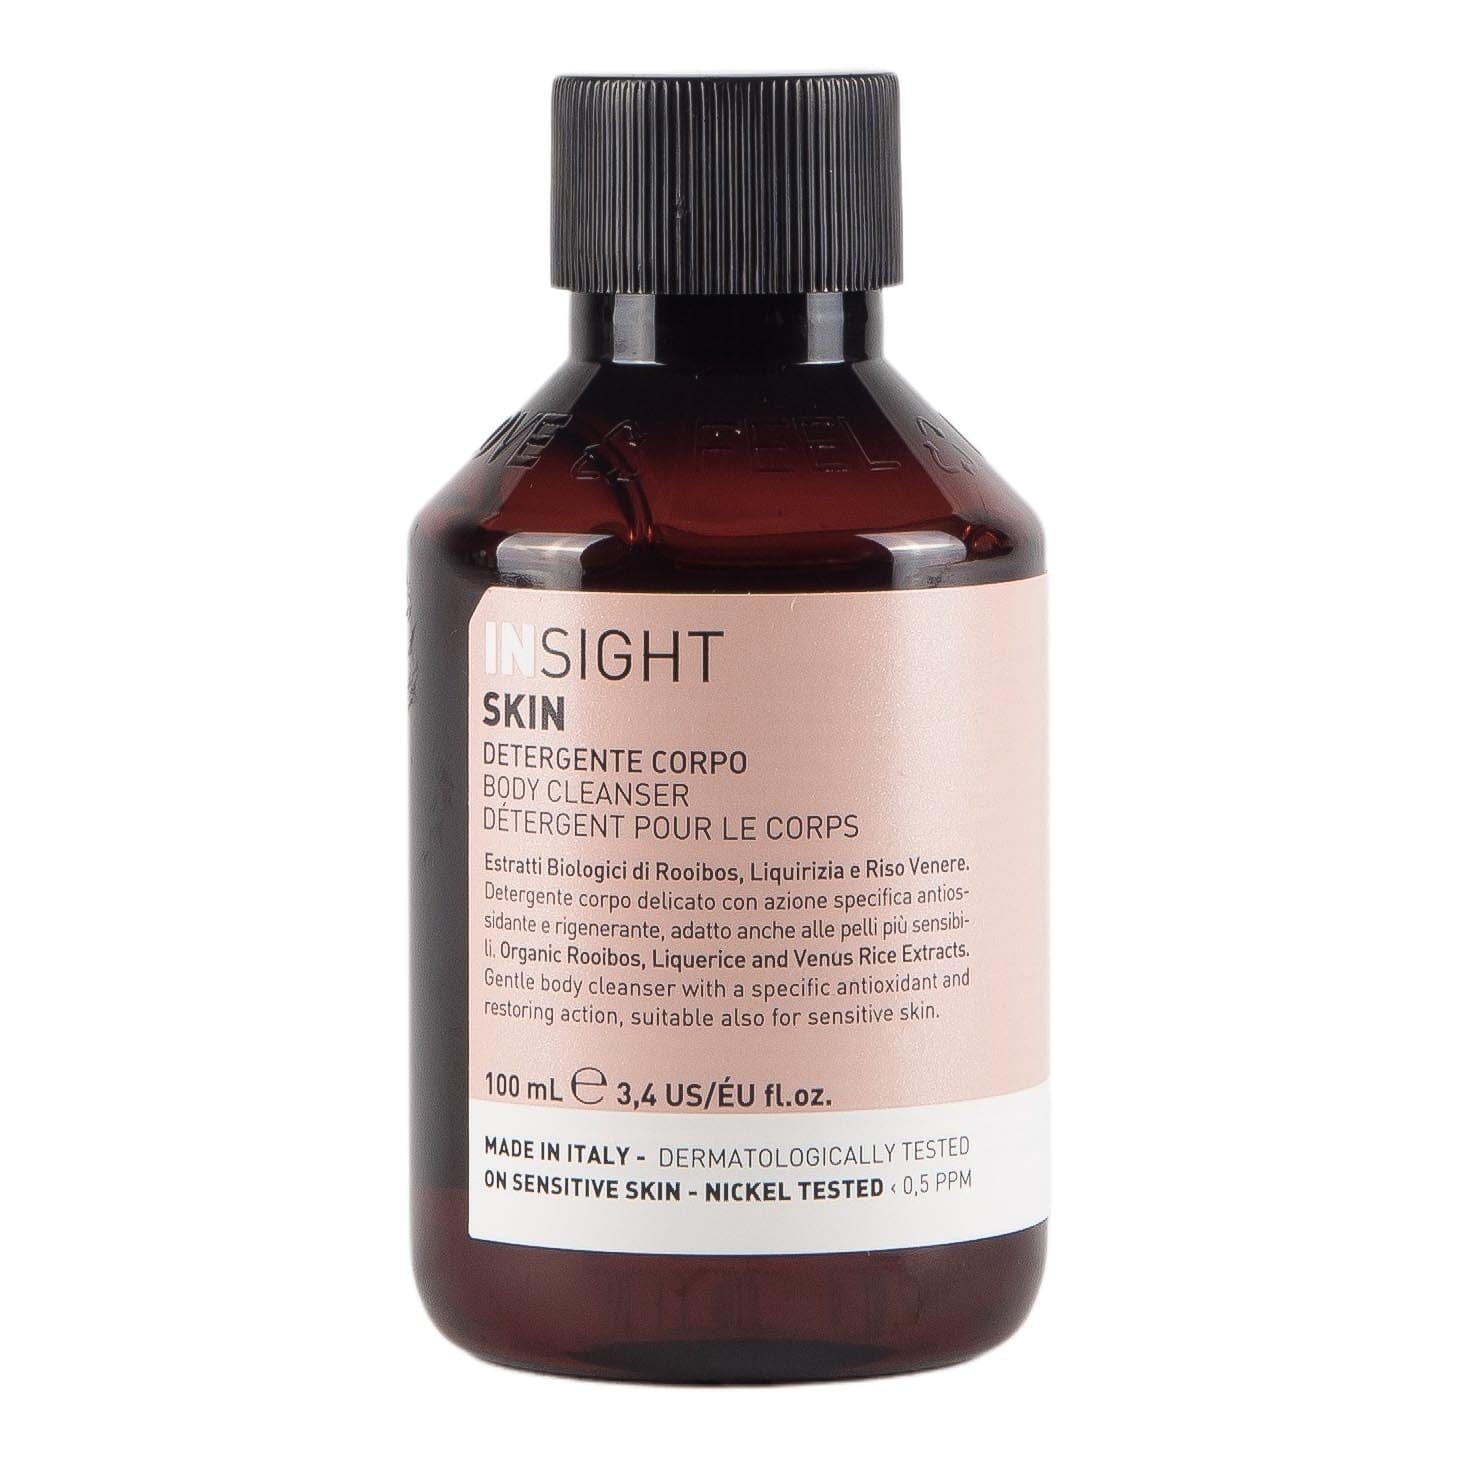 Insight Skin Body Cleanser 100 ml